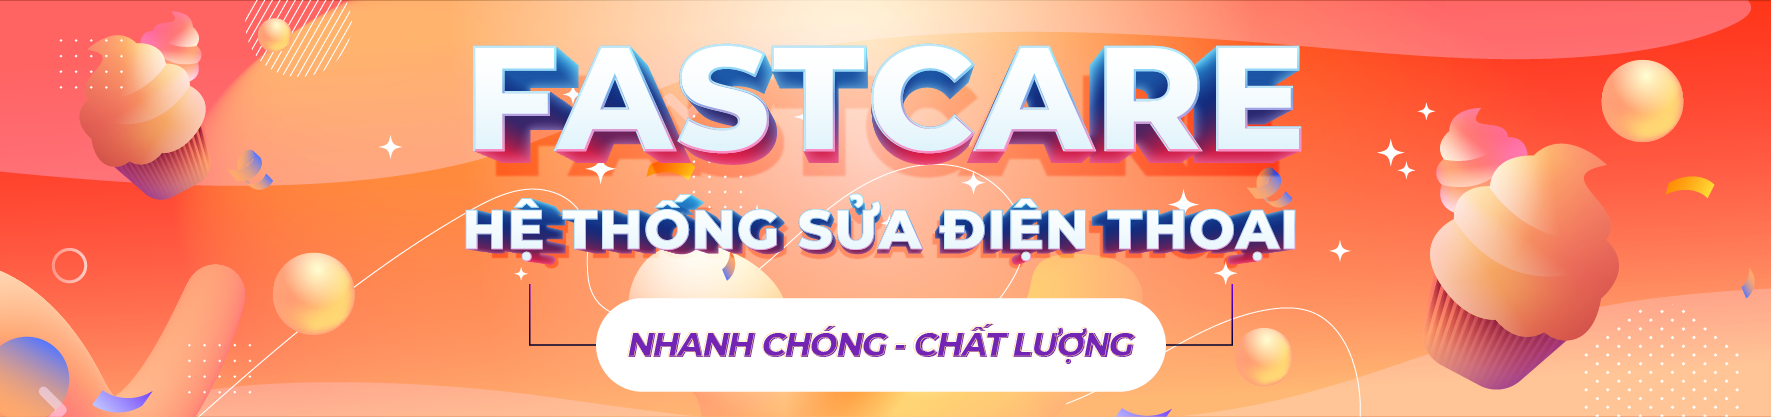 banner-fastcare-blog-desktop-sinh-nhat-chat-luong-850x200